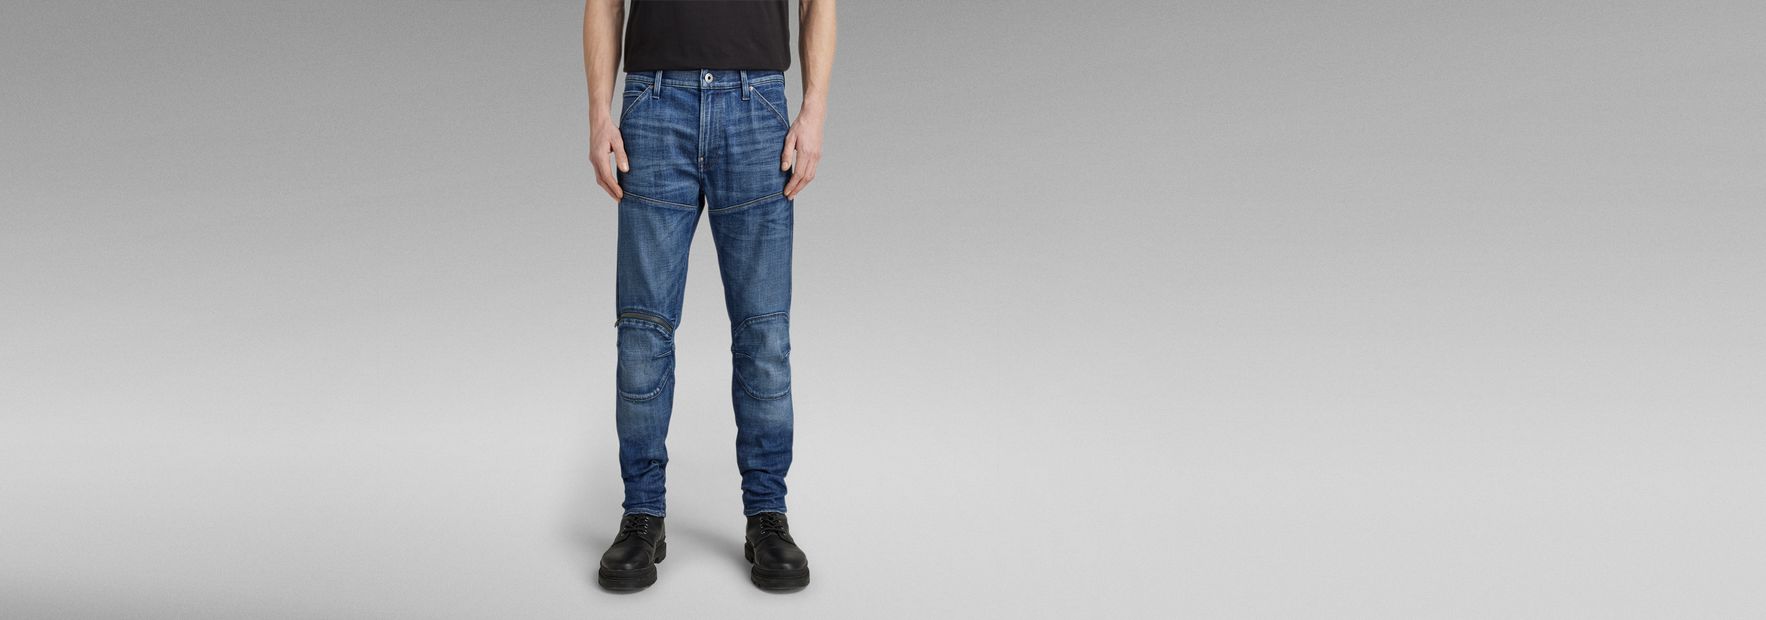 RG Jeans C003-2 - RGJeans